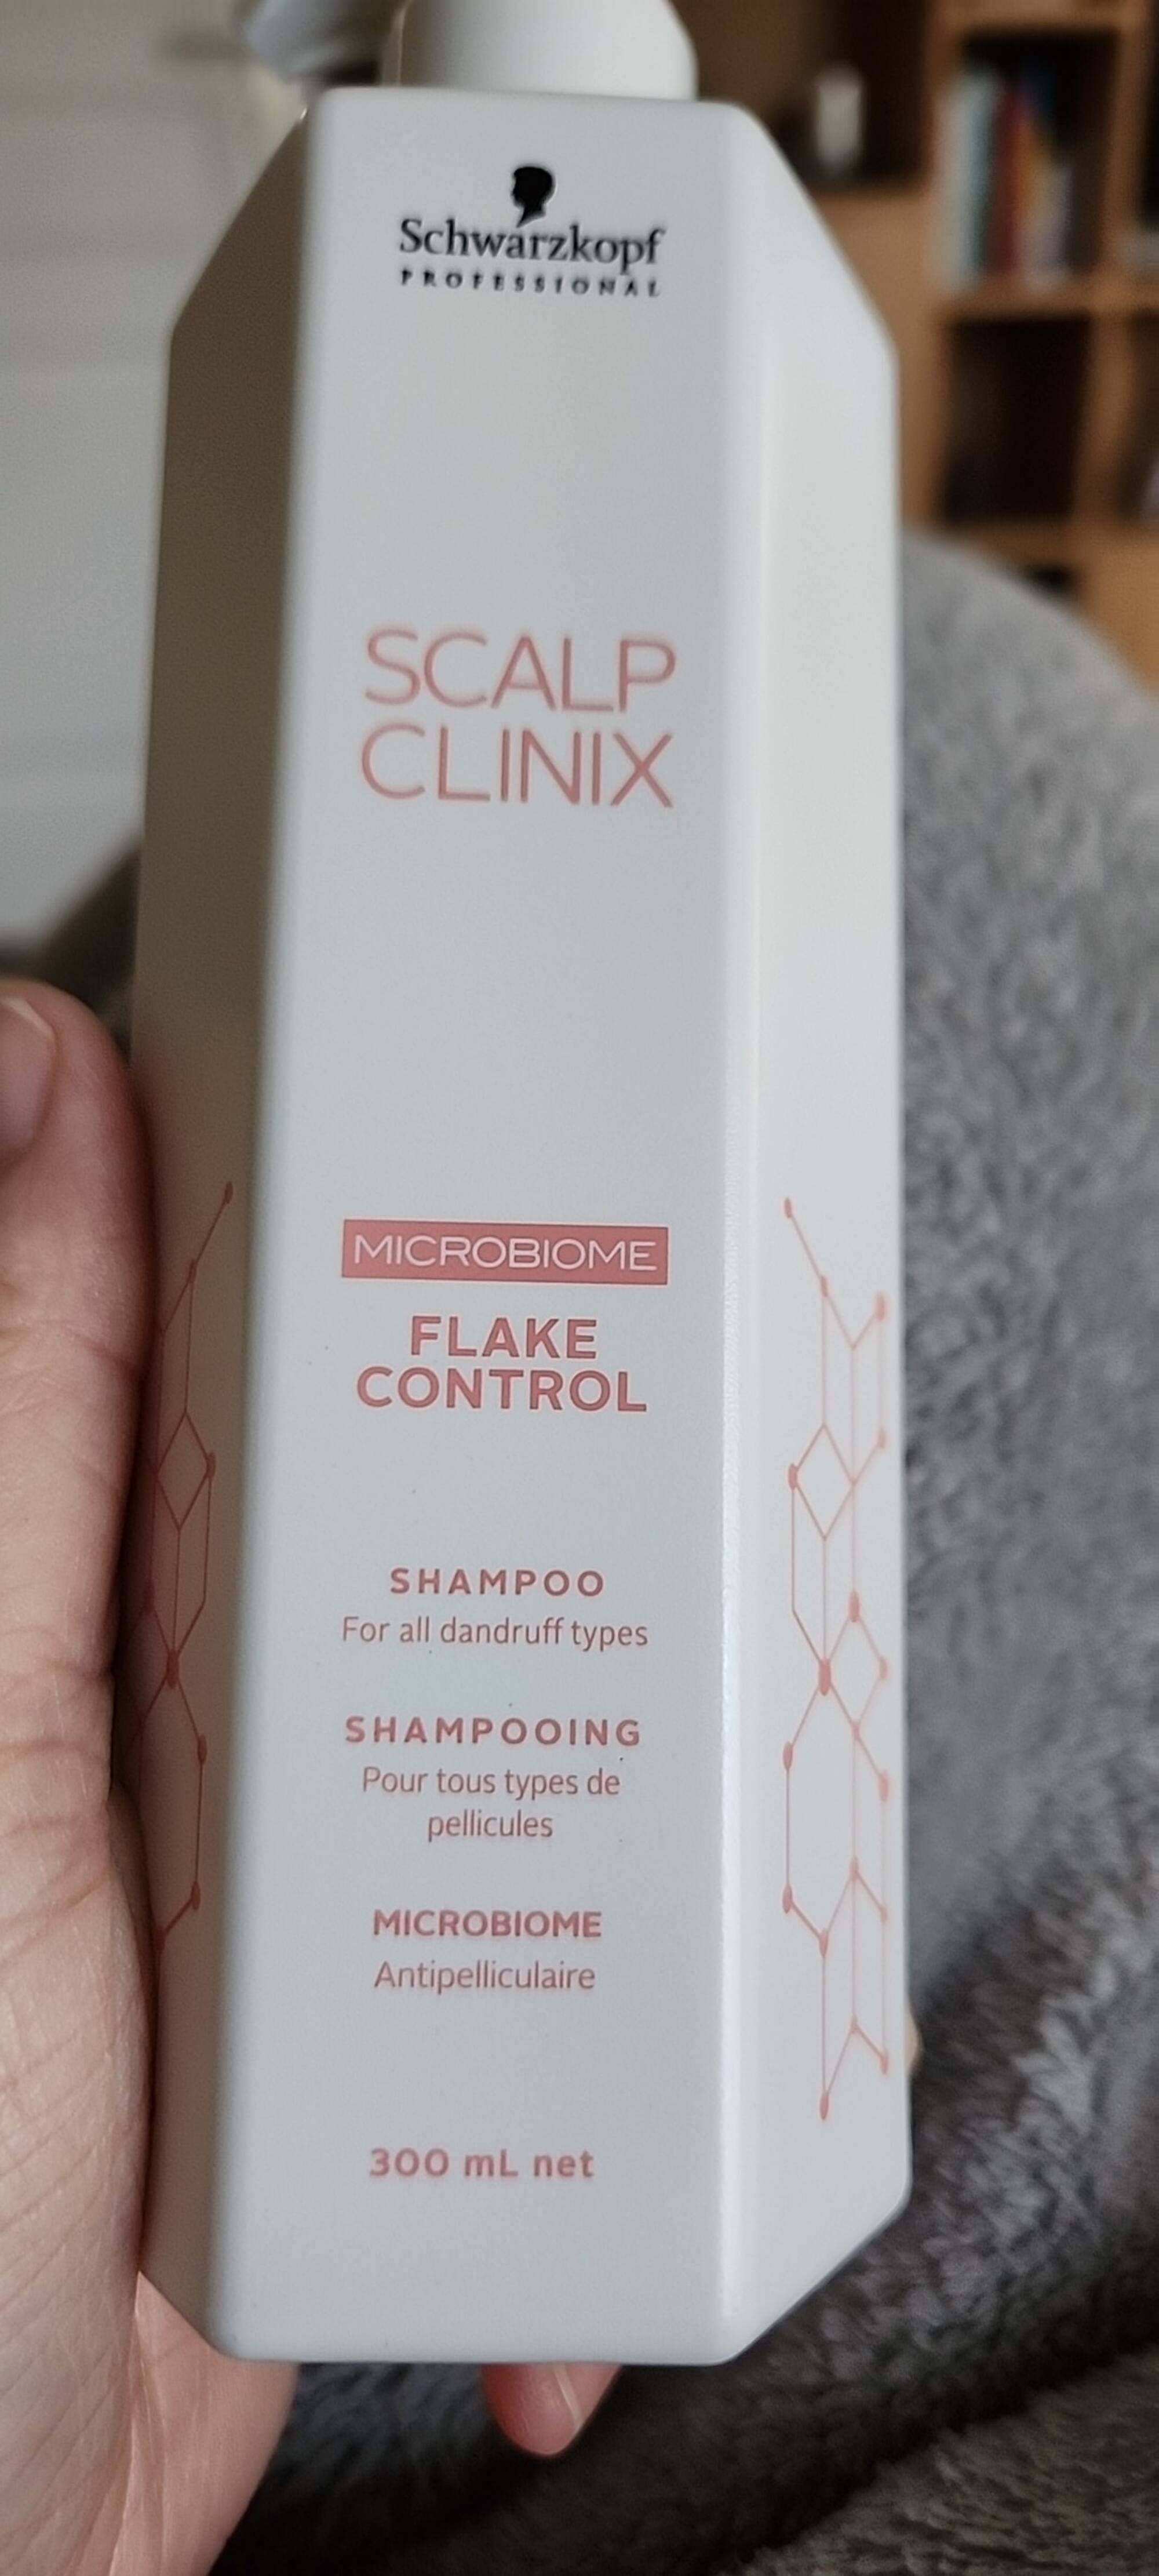 SCHWARZKOPF - Scalp clinix - Shampooing flake control